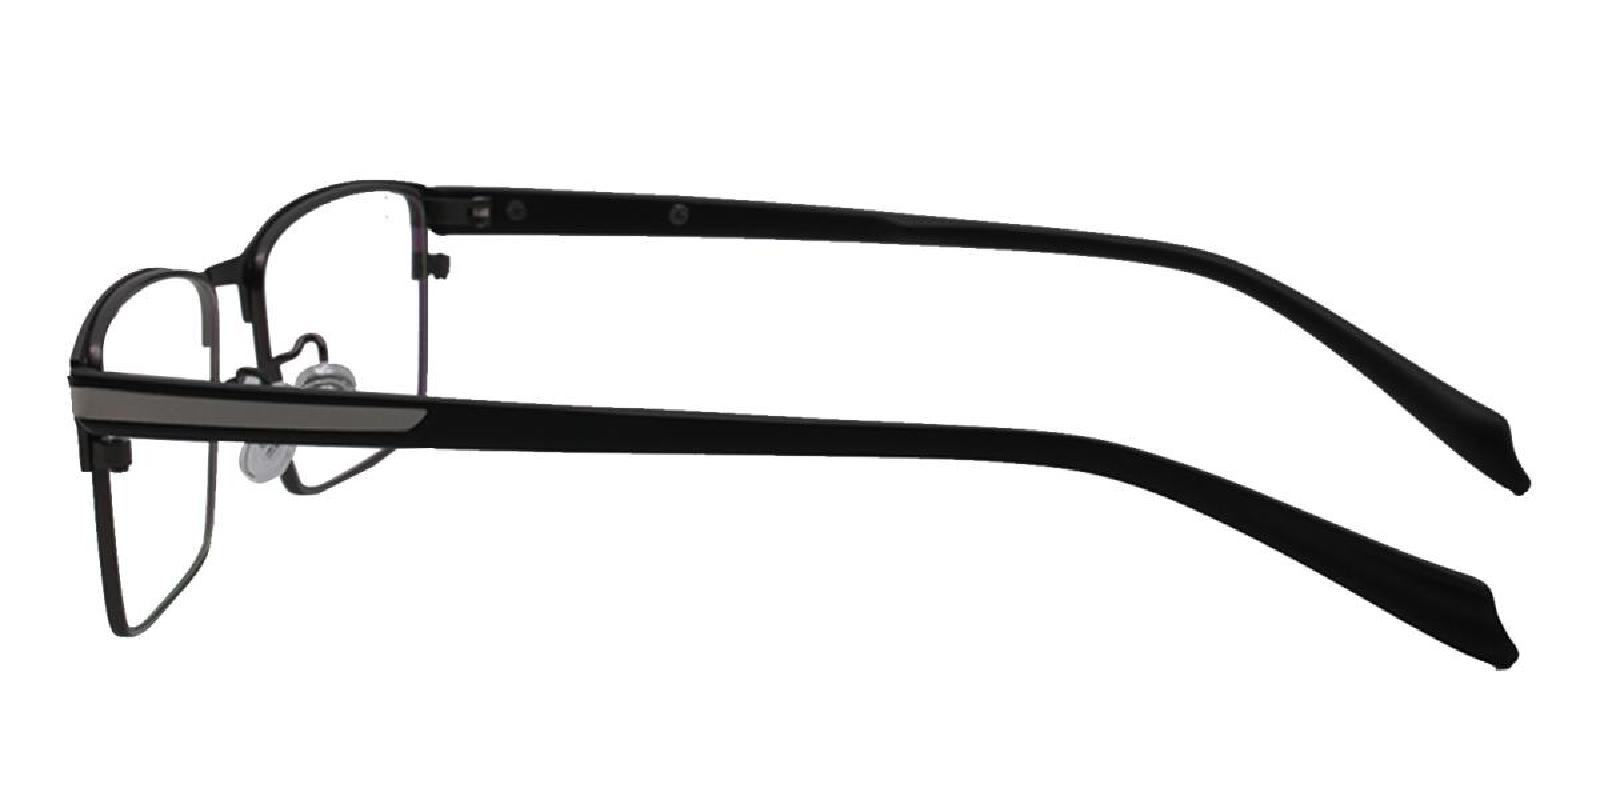 Frade-Black-Rectangle-Metal-Eyeglasses-detail